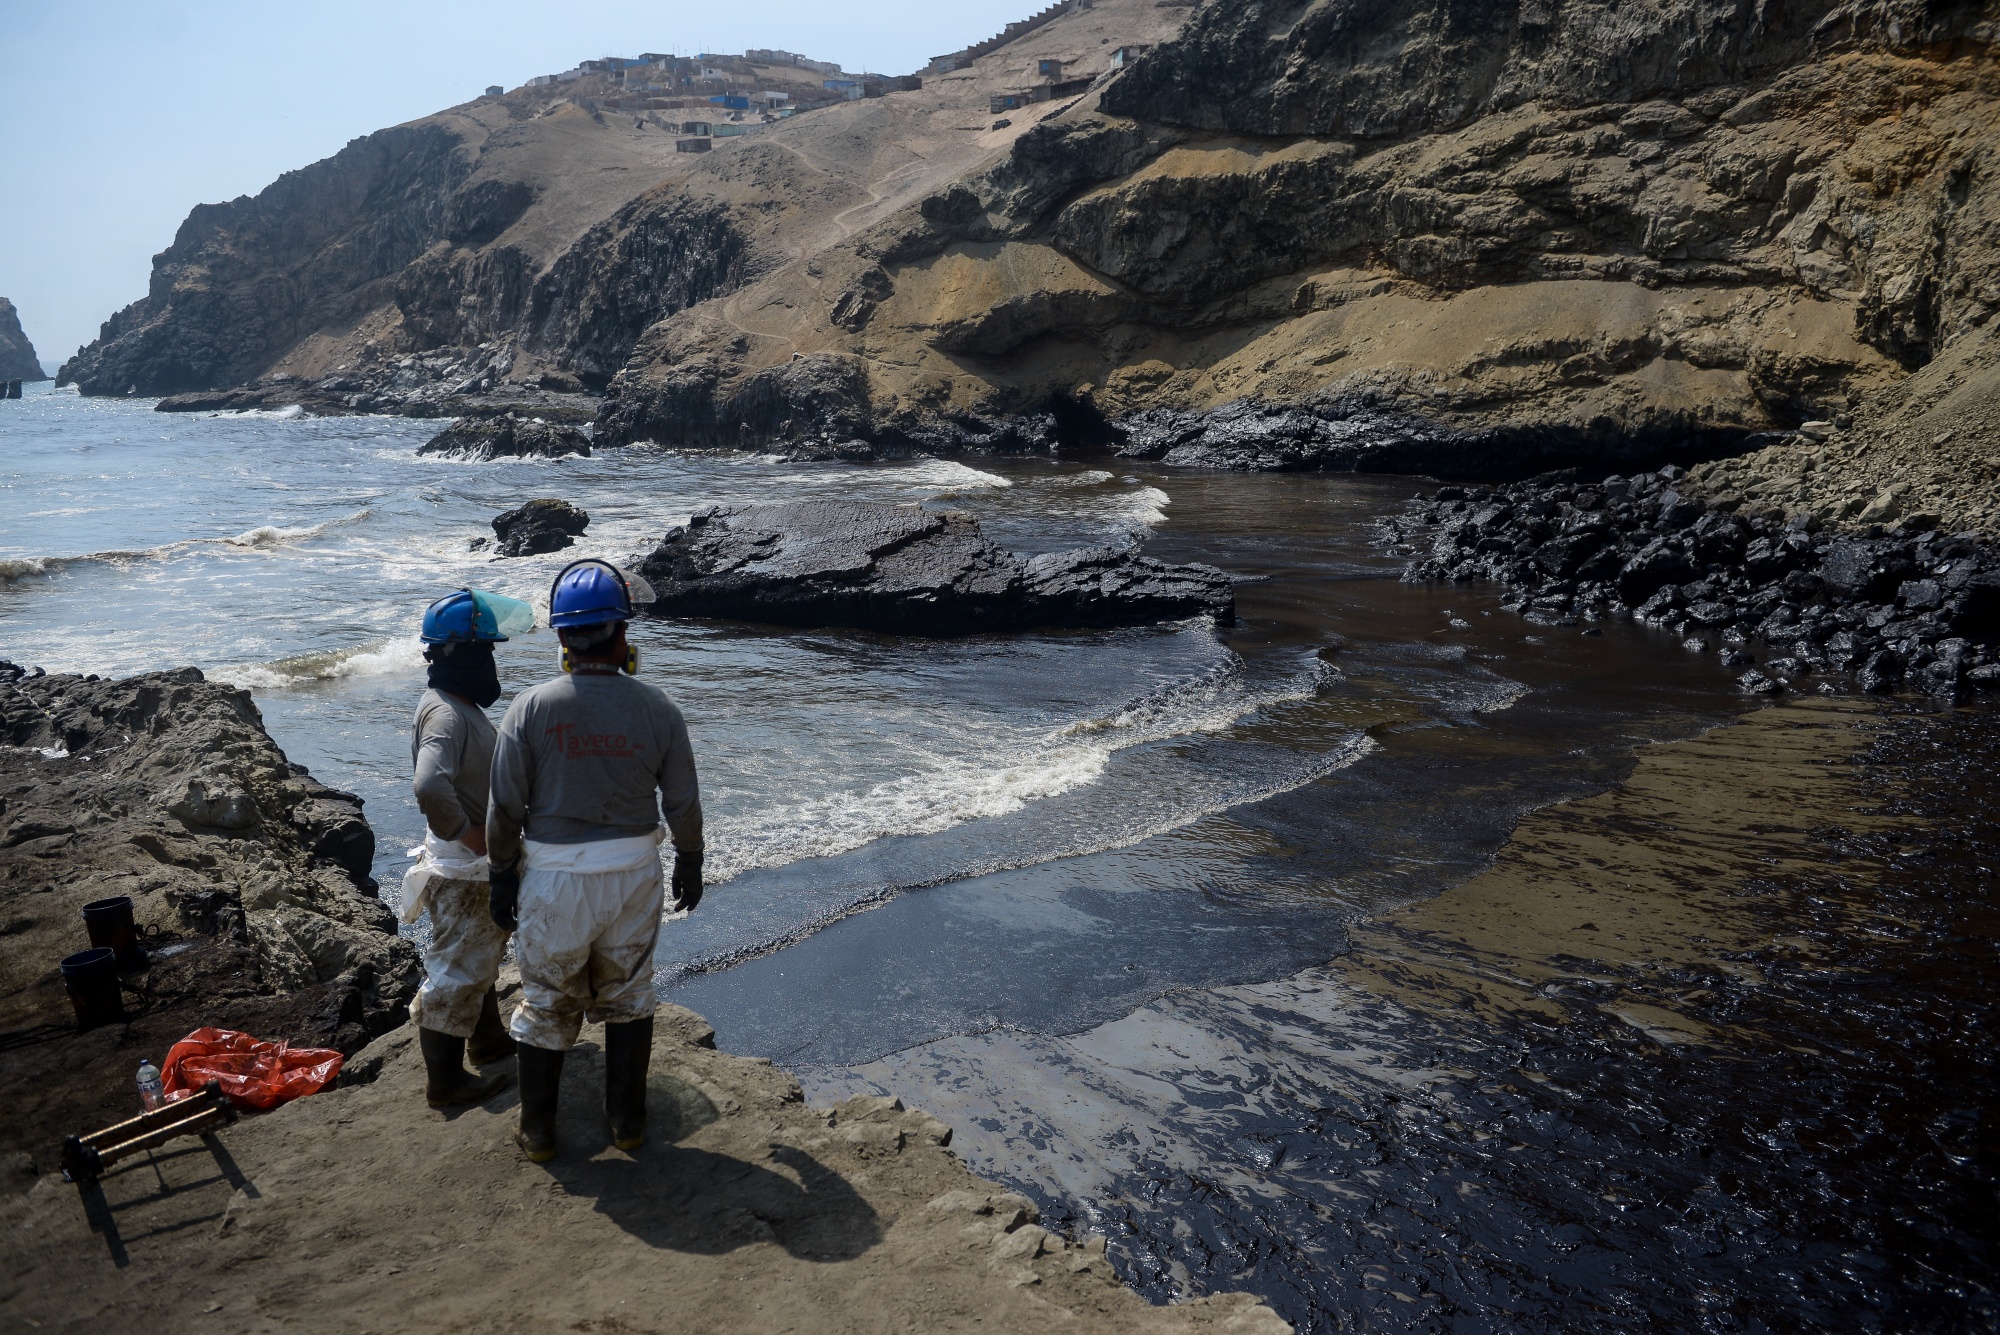 Workers observe an oil spill on Cavero beach in&nbsp;Peru, on Jan. 19, 2022.&nbsp;